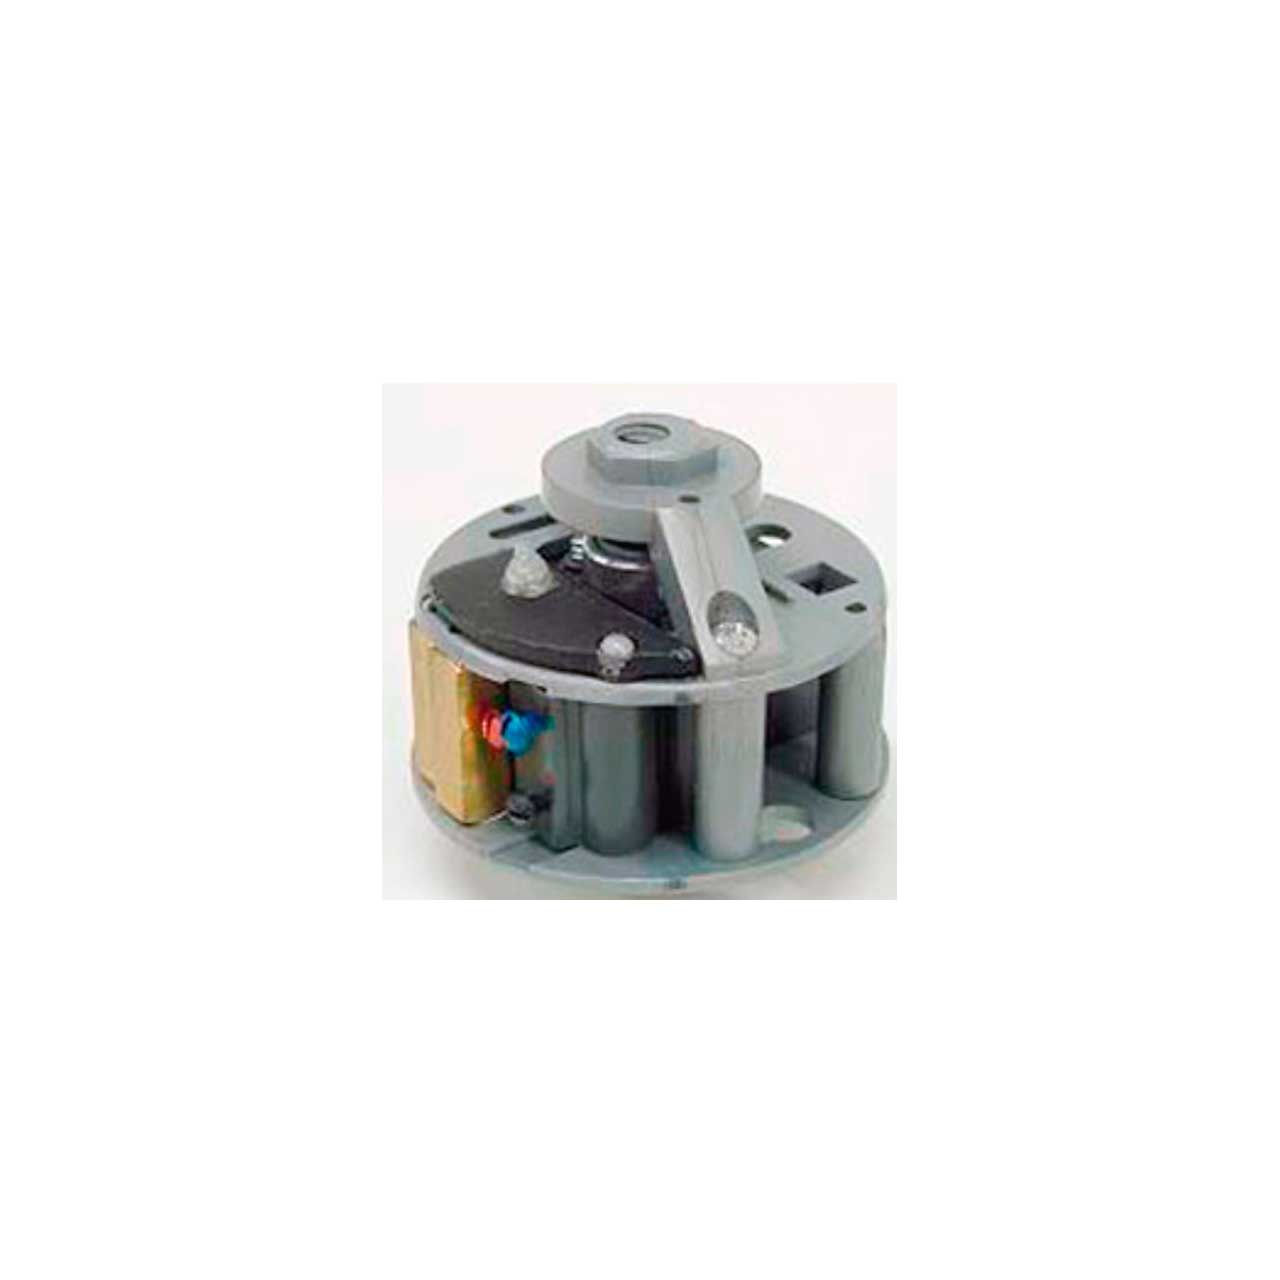 CCT 24-340916B Port-A-Strip Cutter Head Module for Belden 1855A Cable  24-340916B/1855A